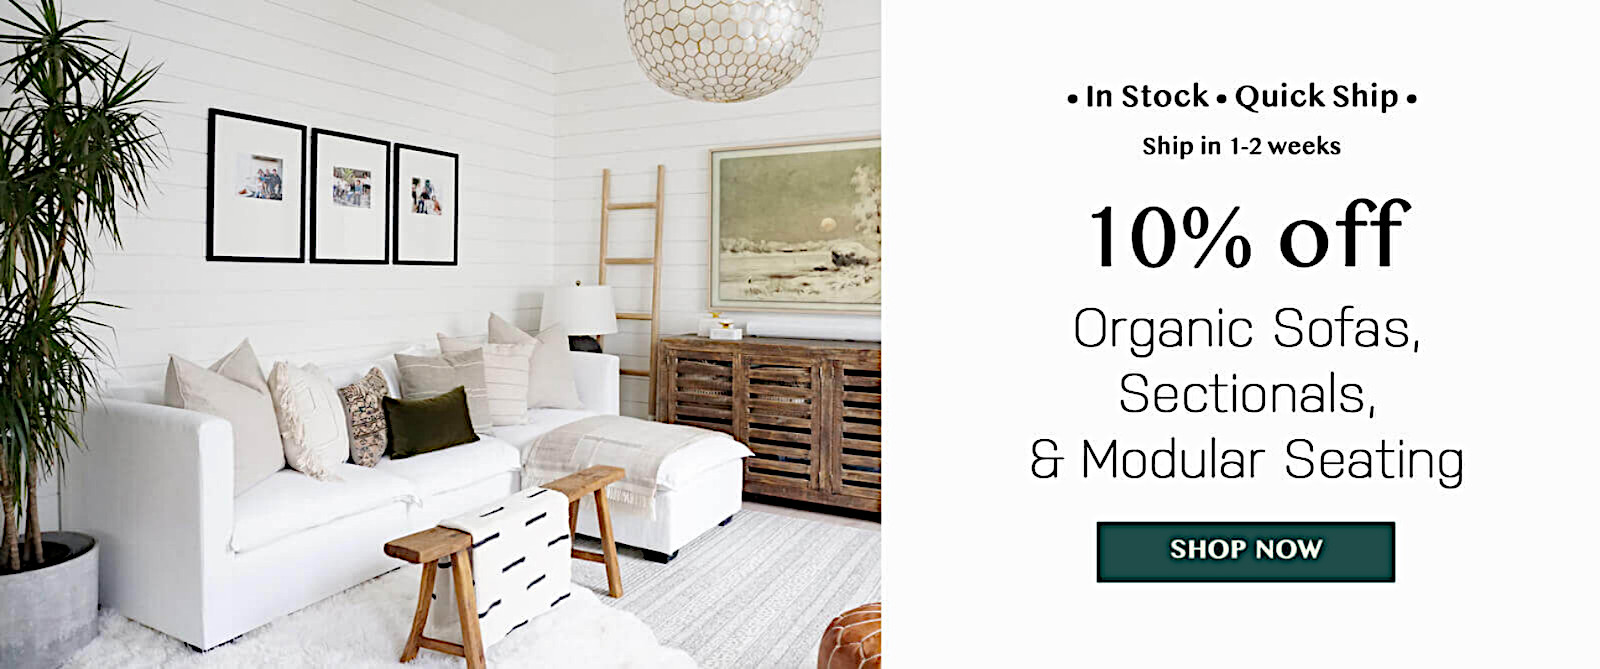 Good Deal organic sofas sectionals modular seating